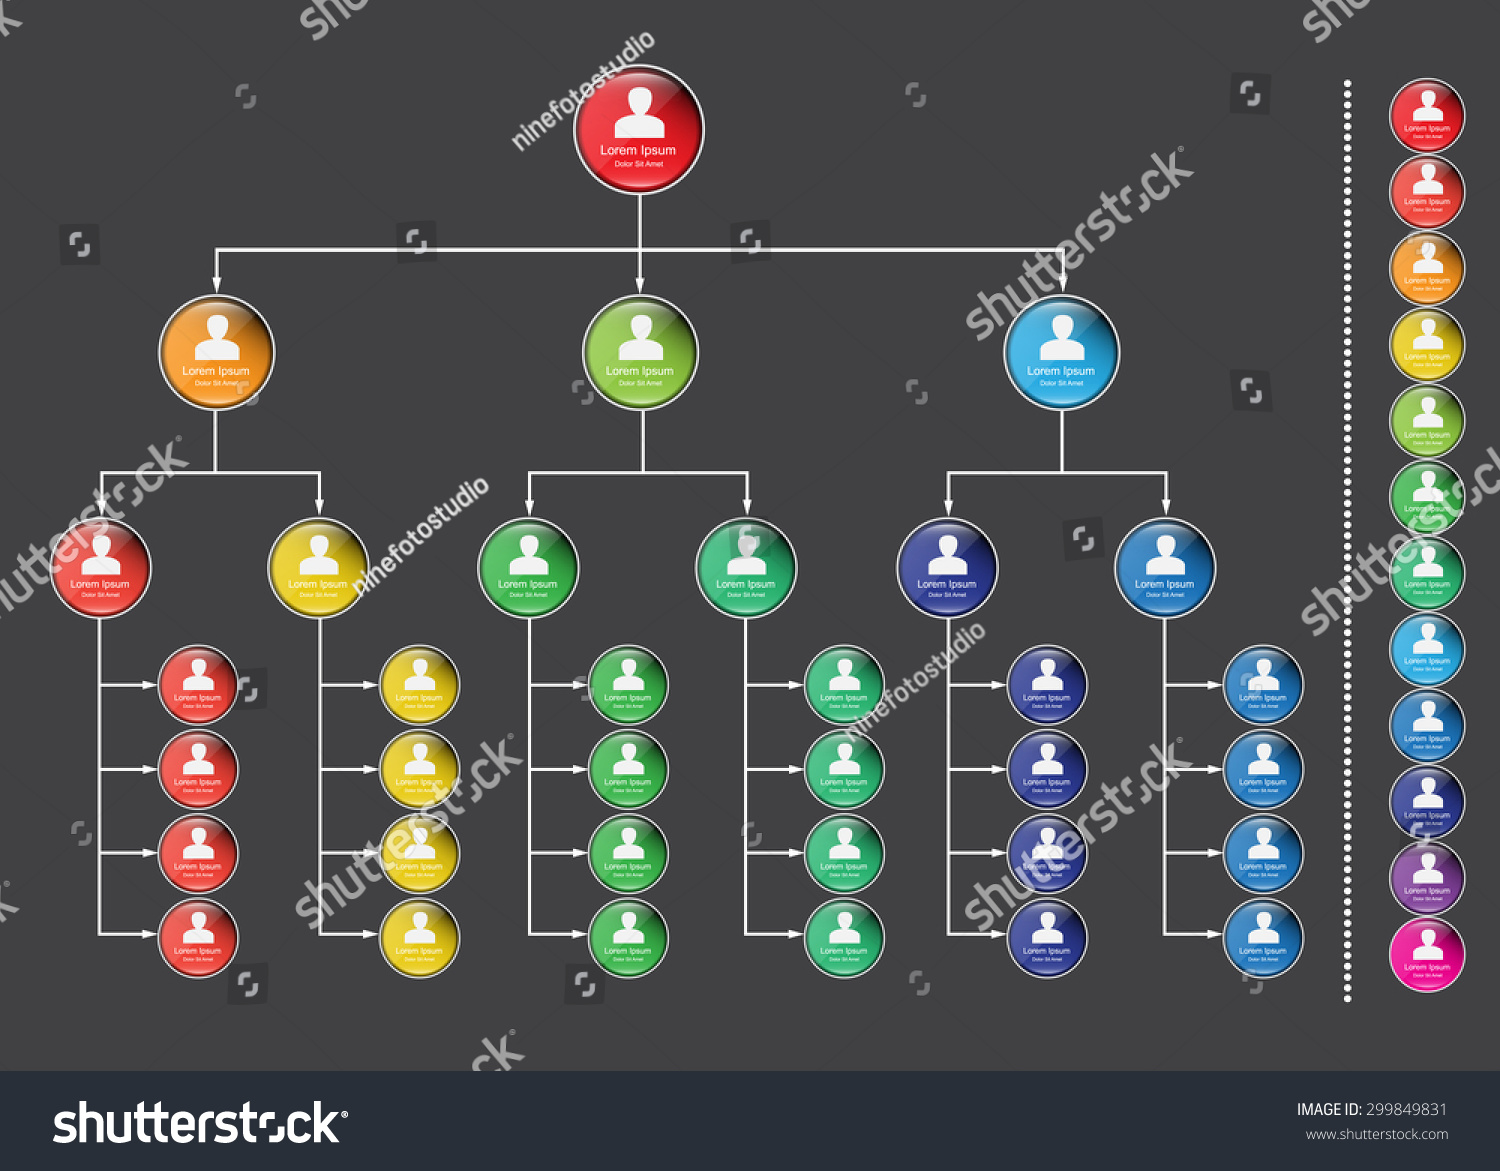 People Symbols Colorful Circle Organizational Chart Stock Vector